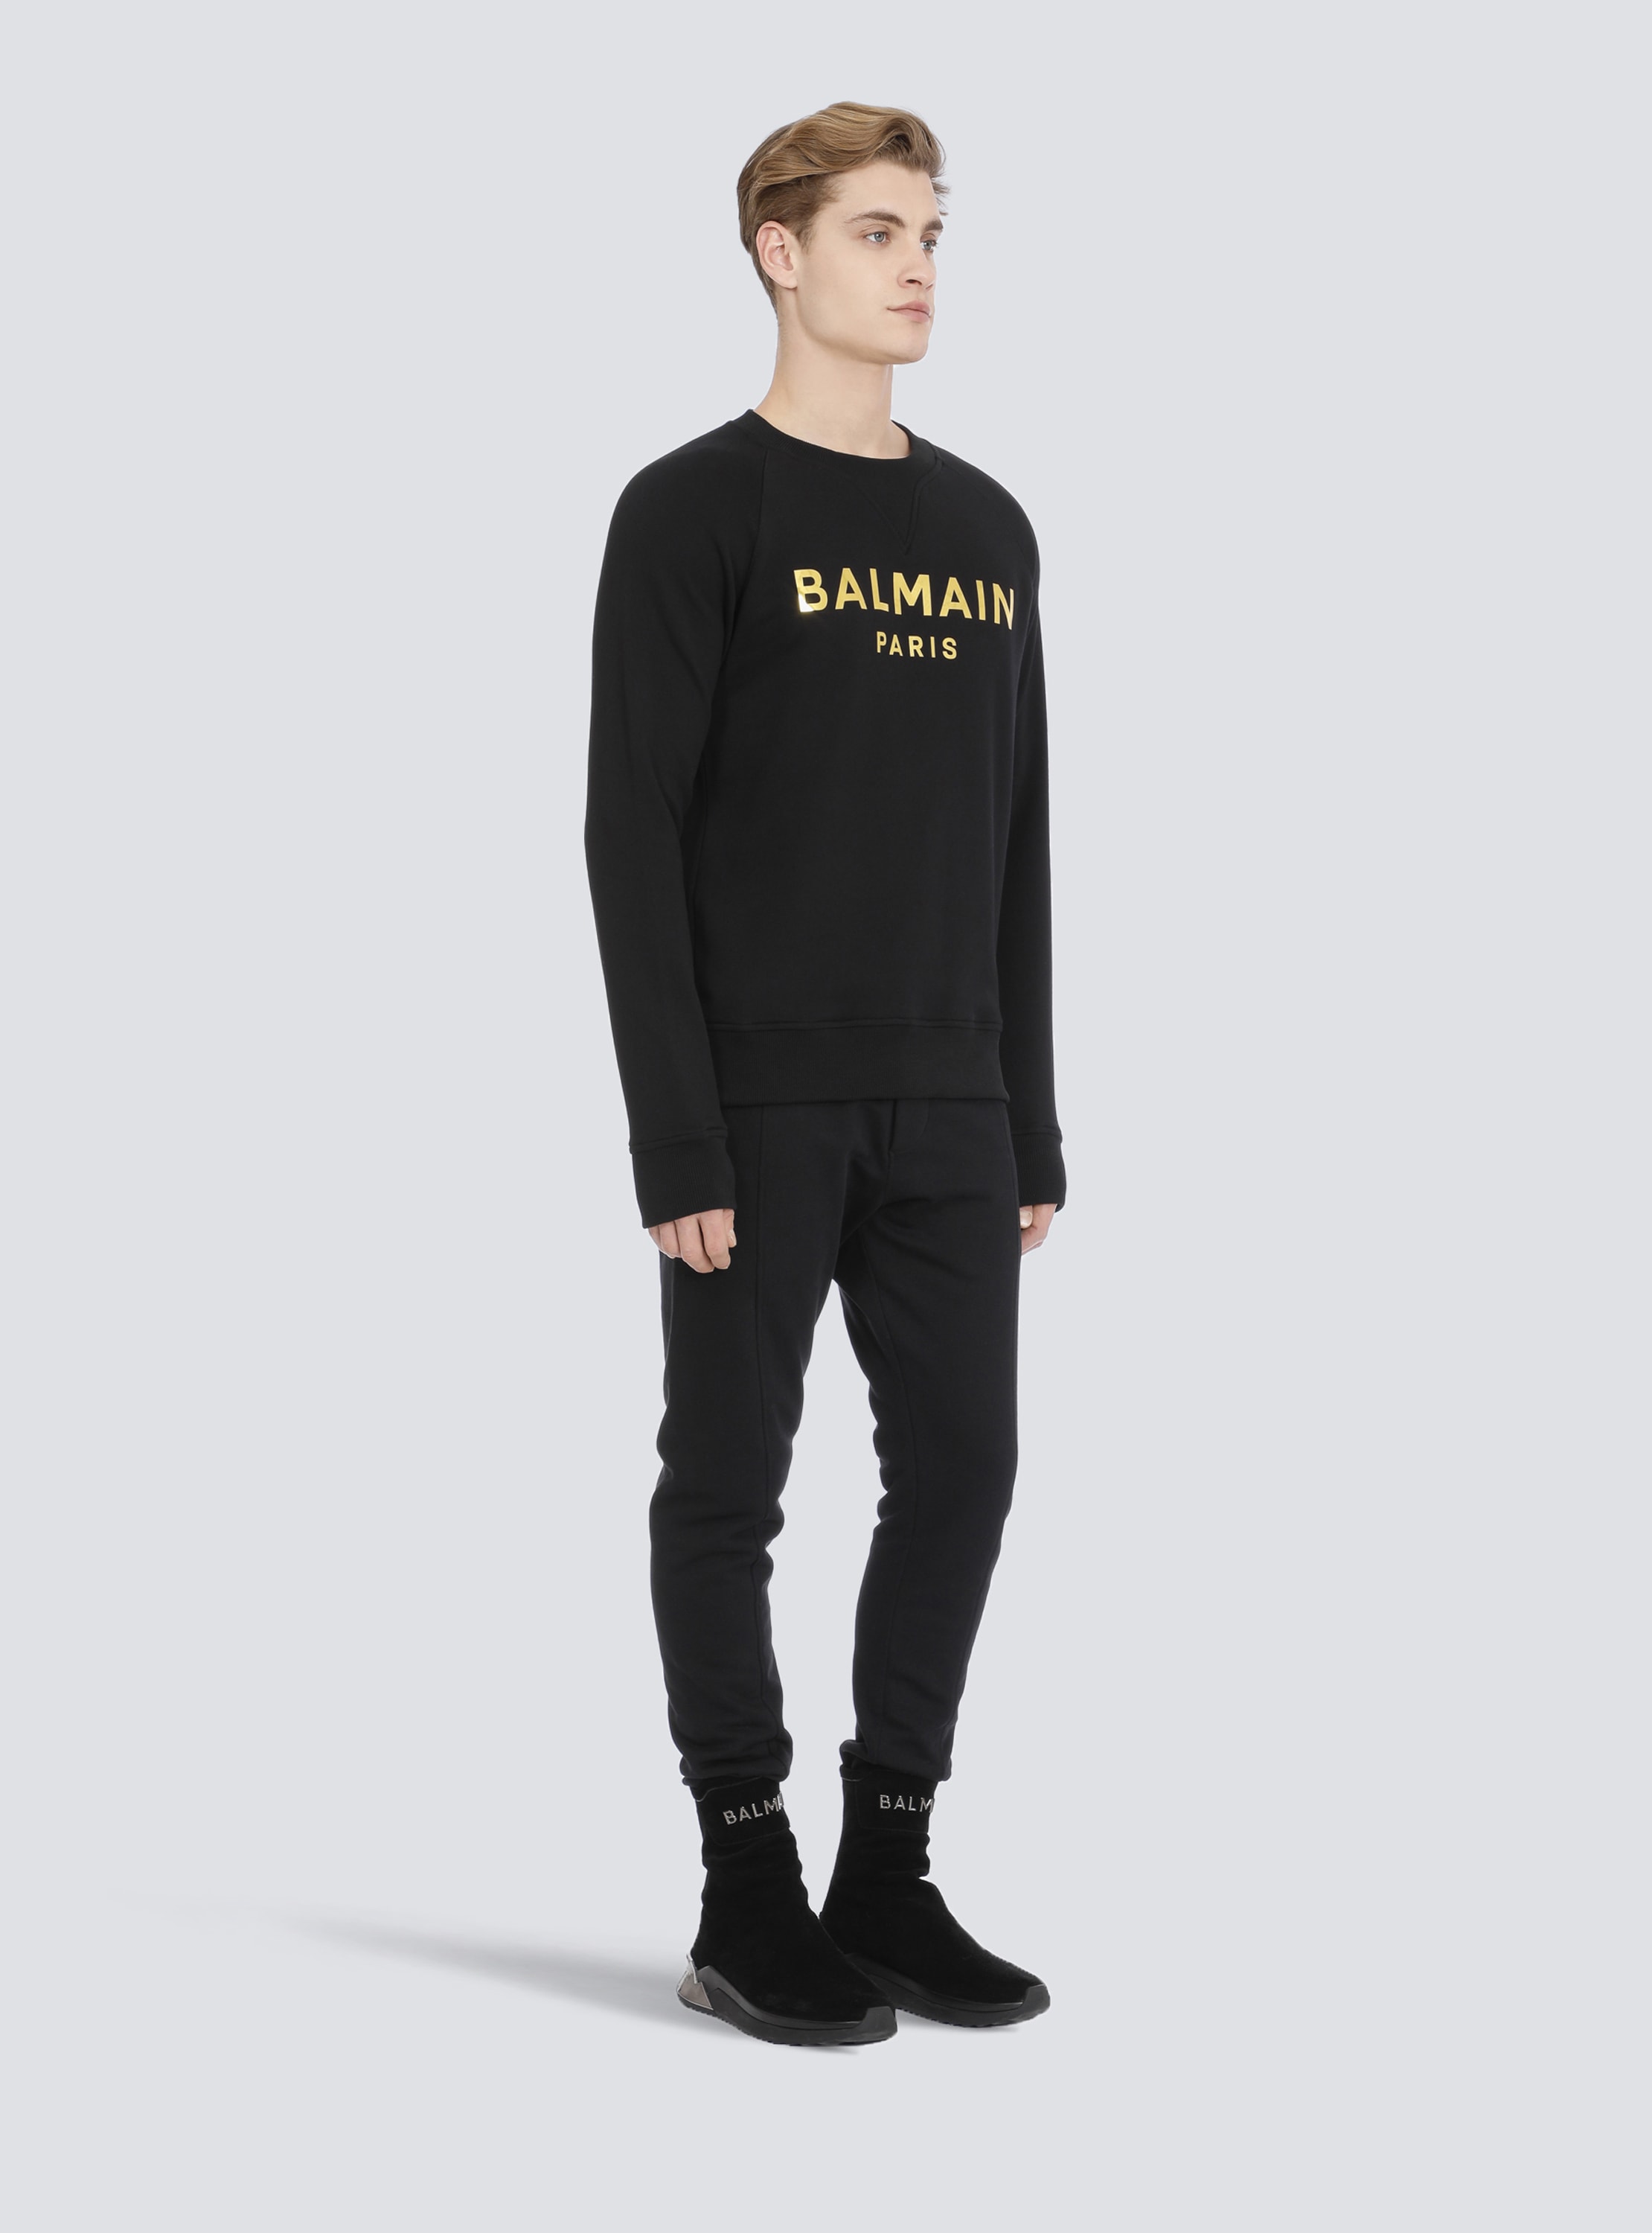 blyant tigger Vedholdende Eco-designed cotton sweatshirt with Balmain Paris logo print gold - Men |  BALMAIN